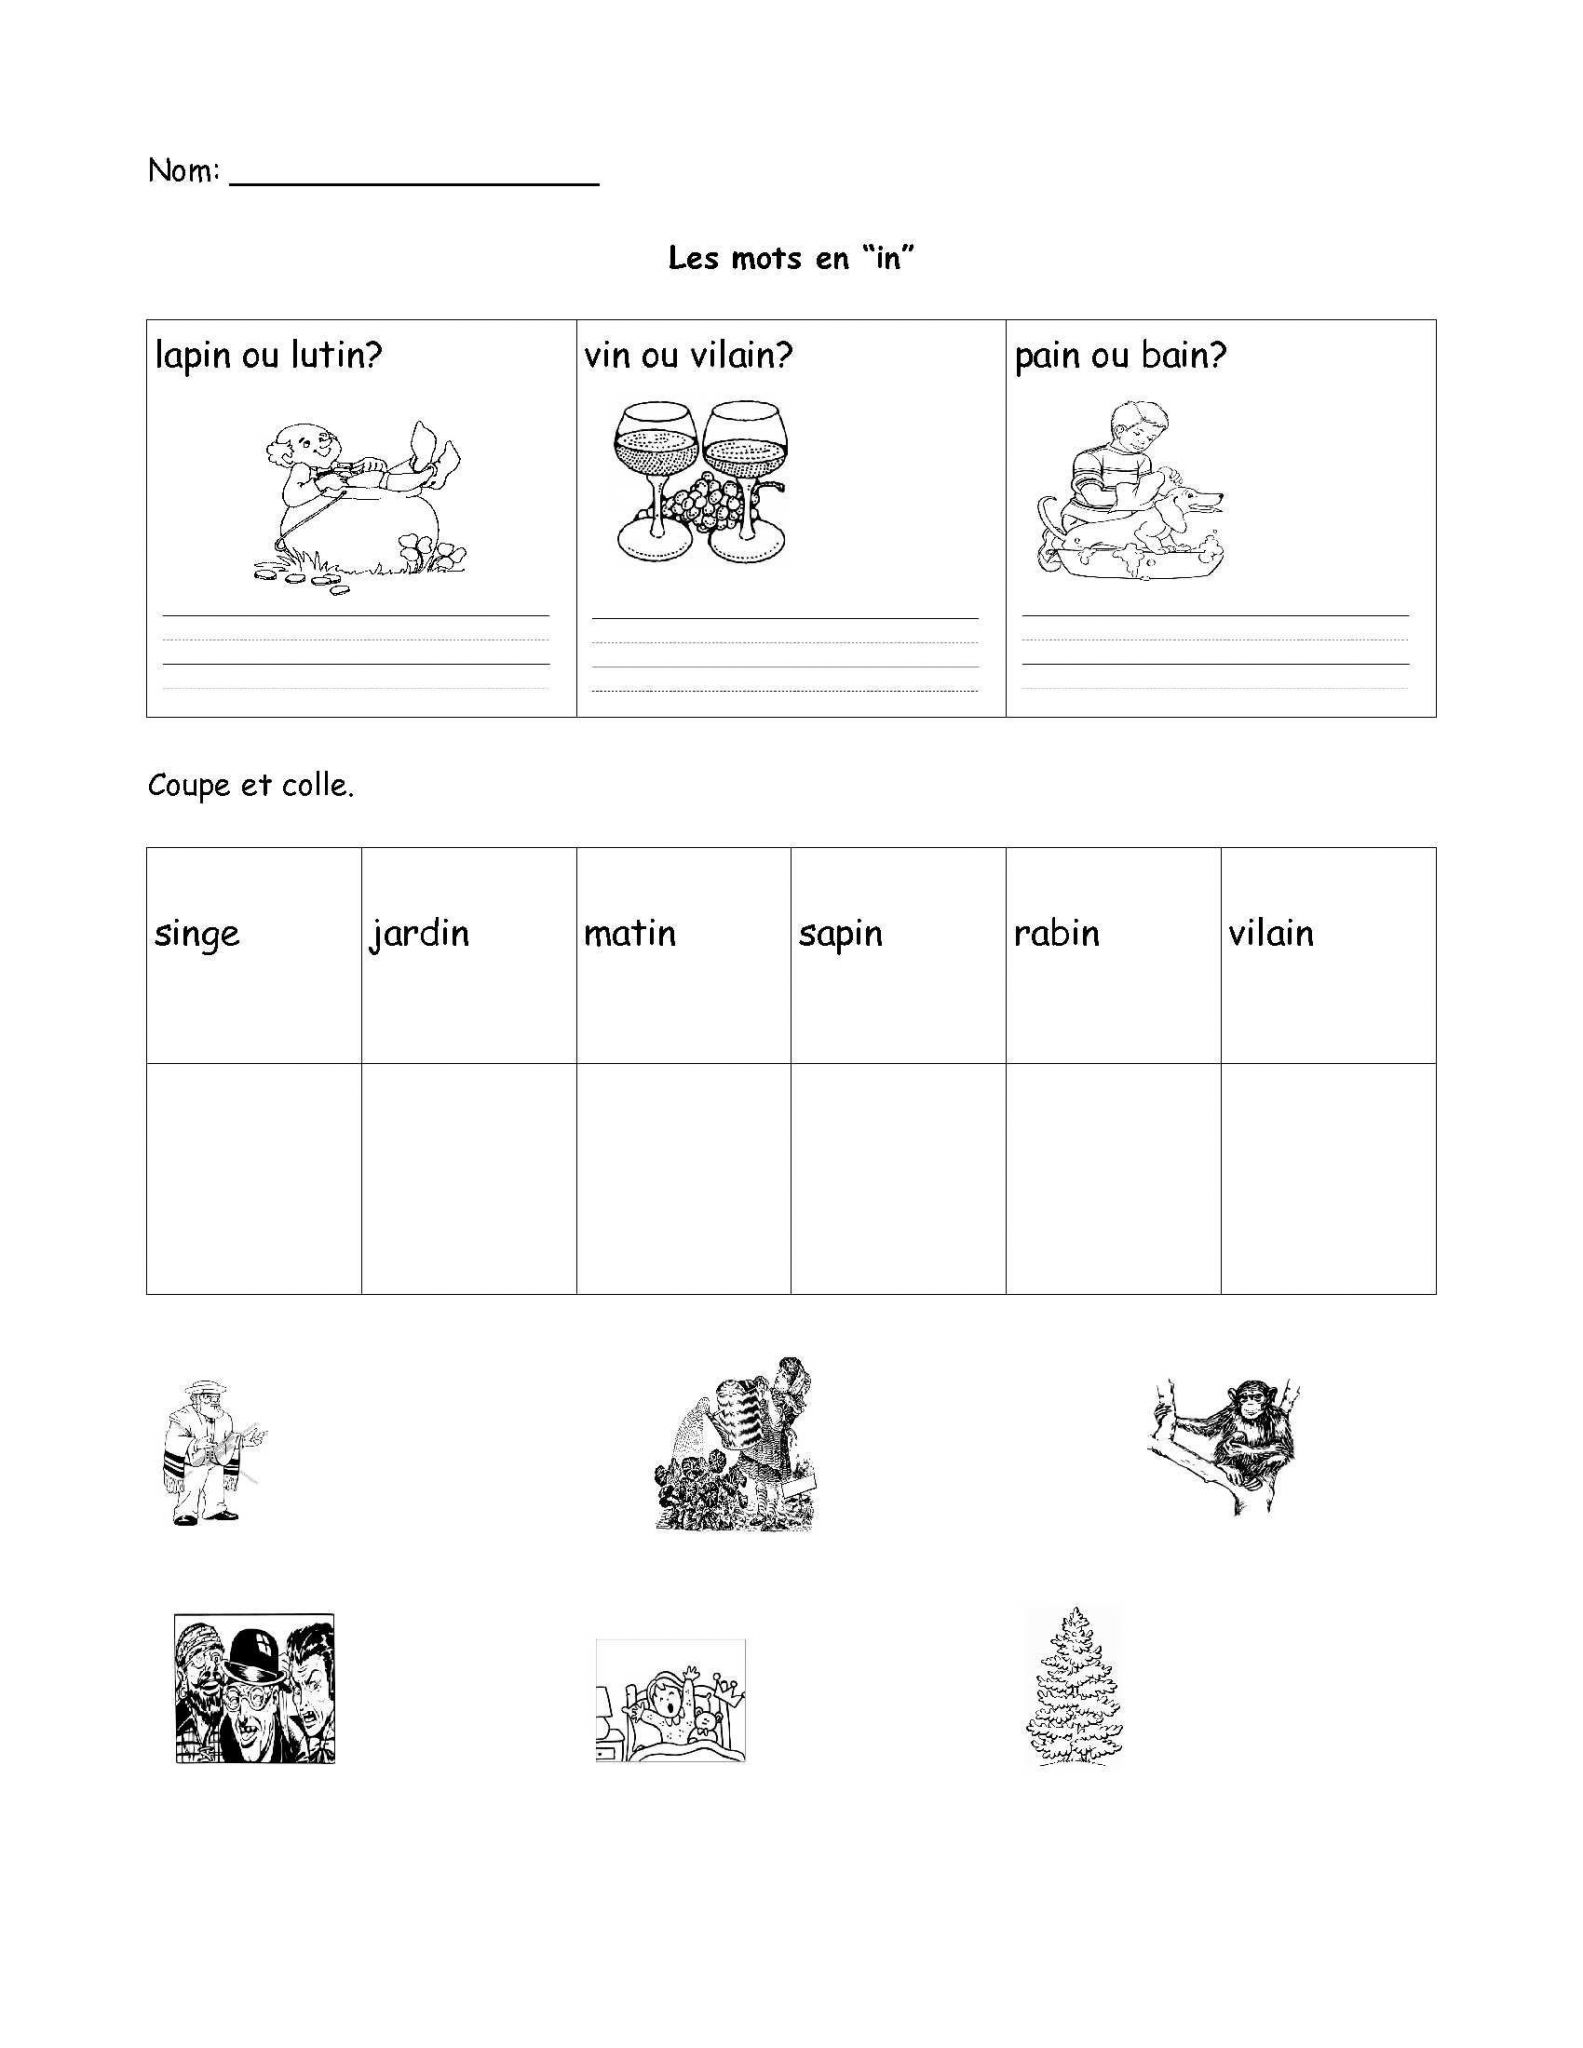 6th-grade-vocabulary-worksheet